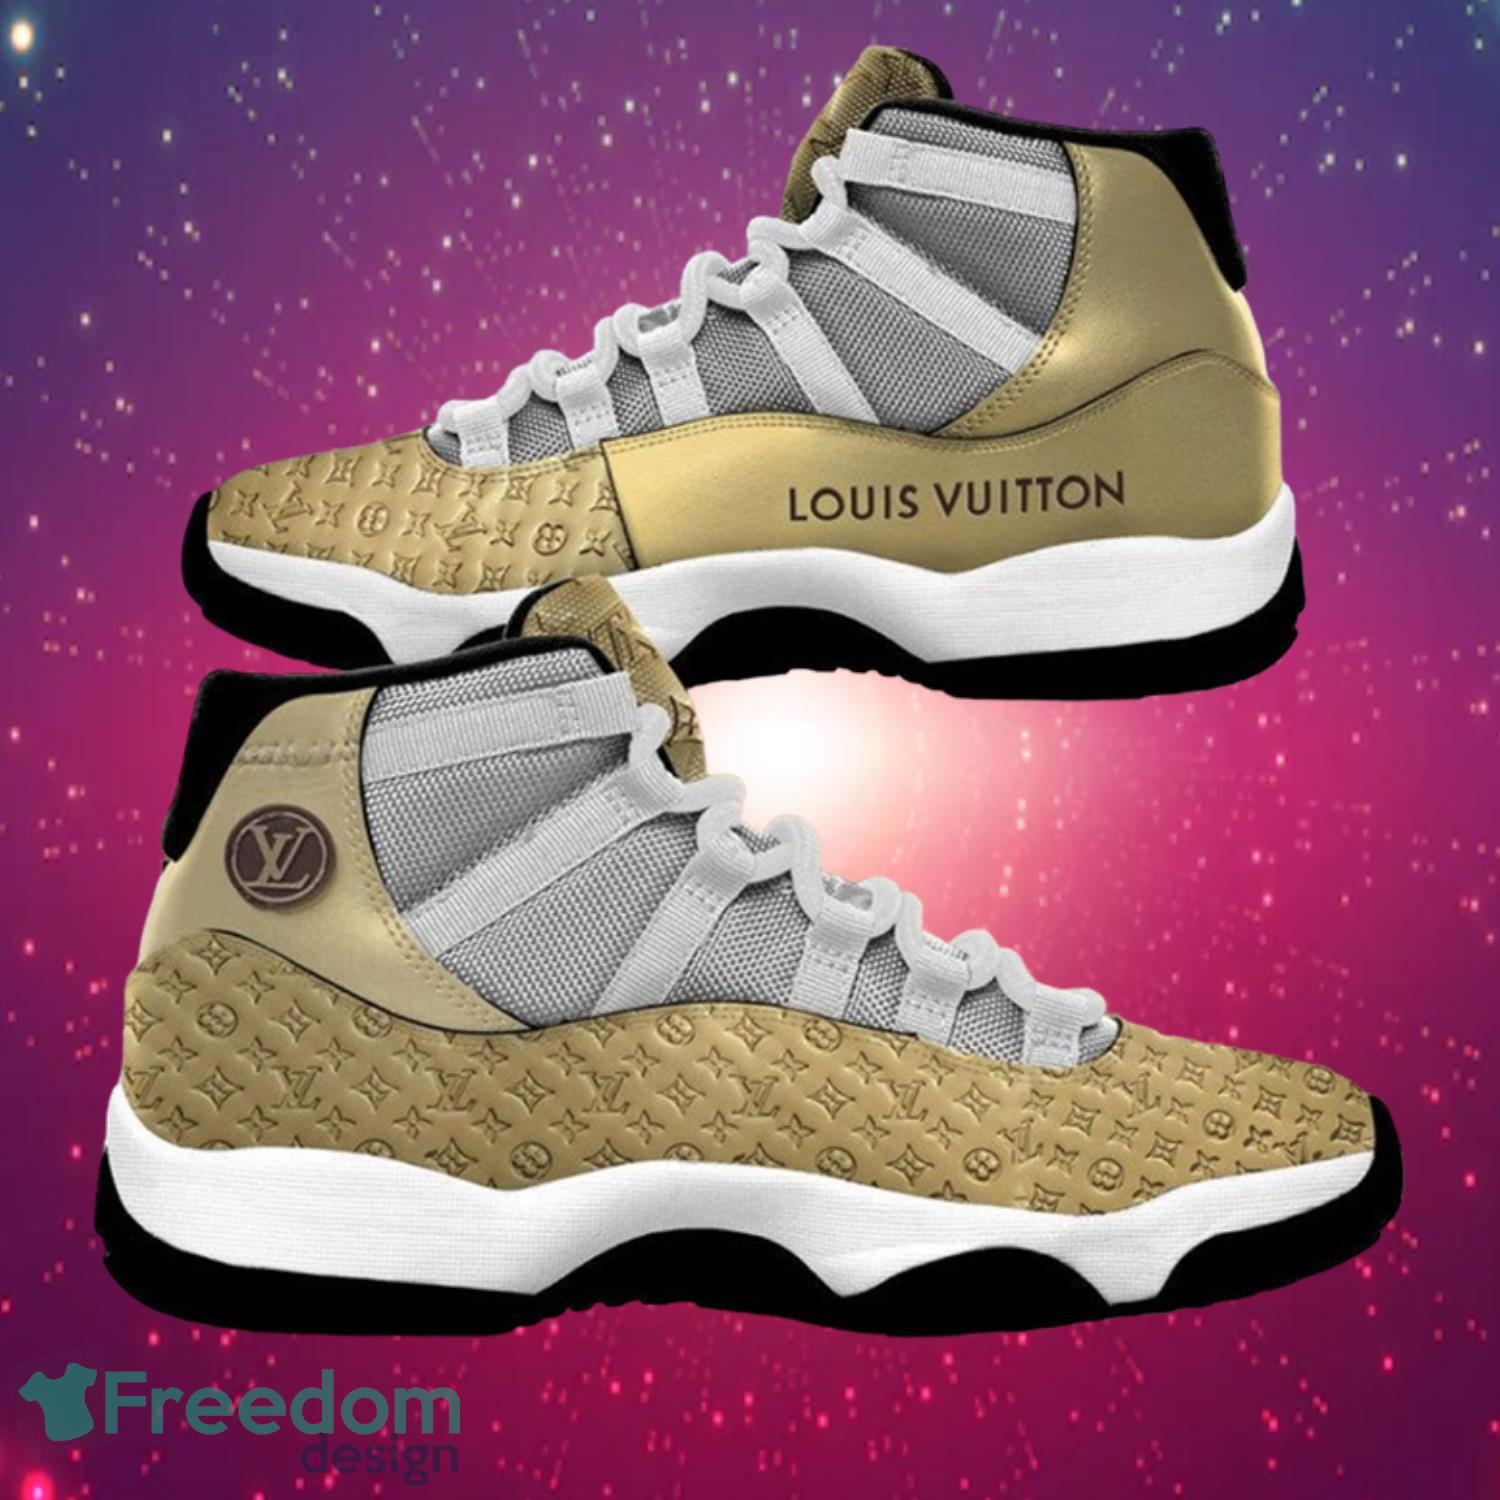 NEW FASHION] Louis Vuitton Gold Air Jordan 11 Sneakers Shoes LV